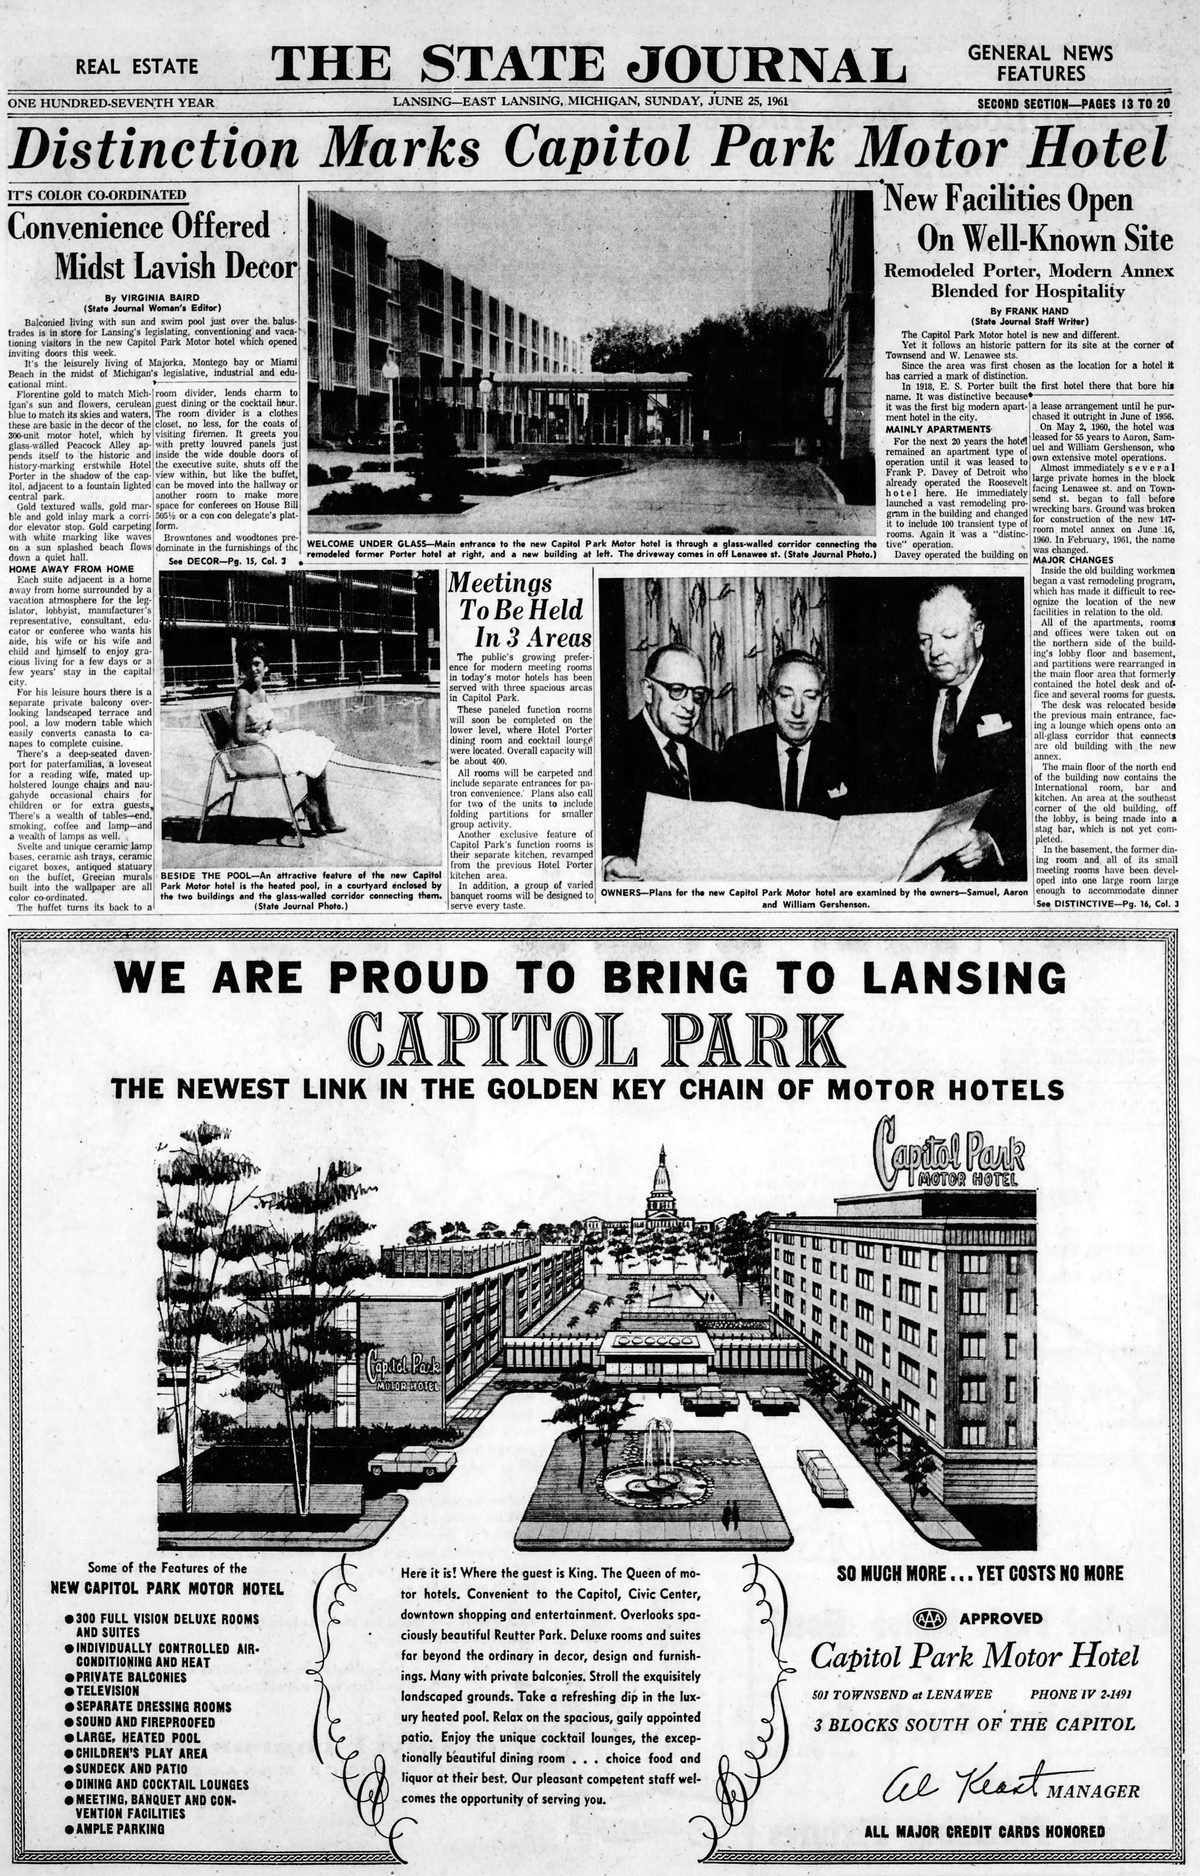 Capitol Park Motor Hotel - June 25 1961 Opening Article